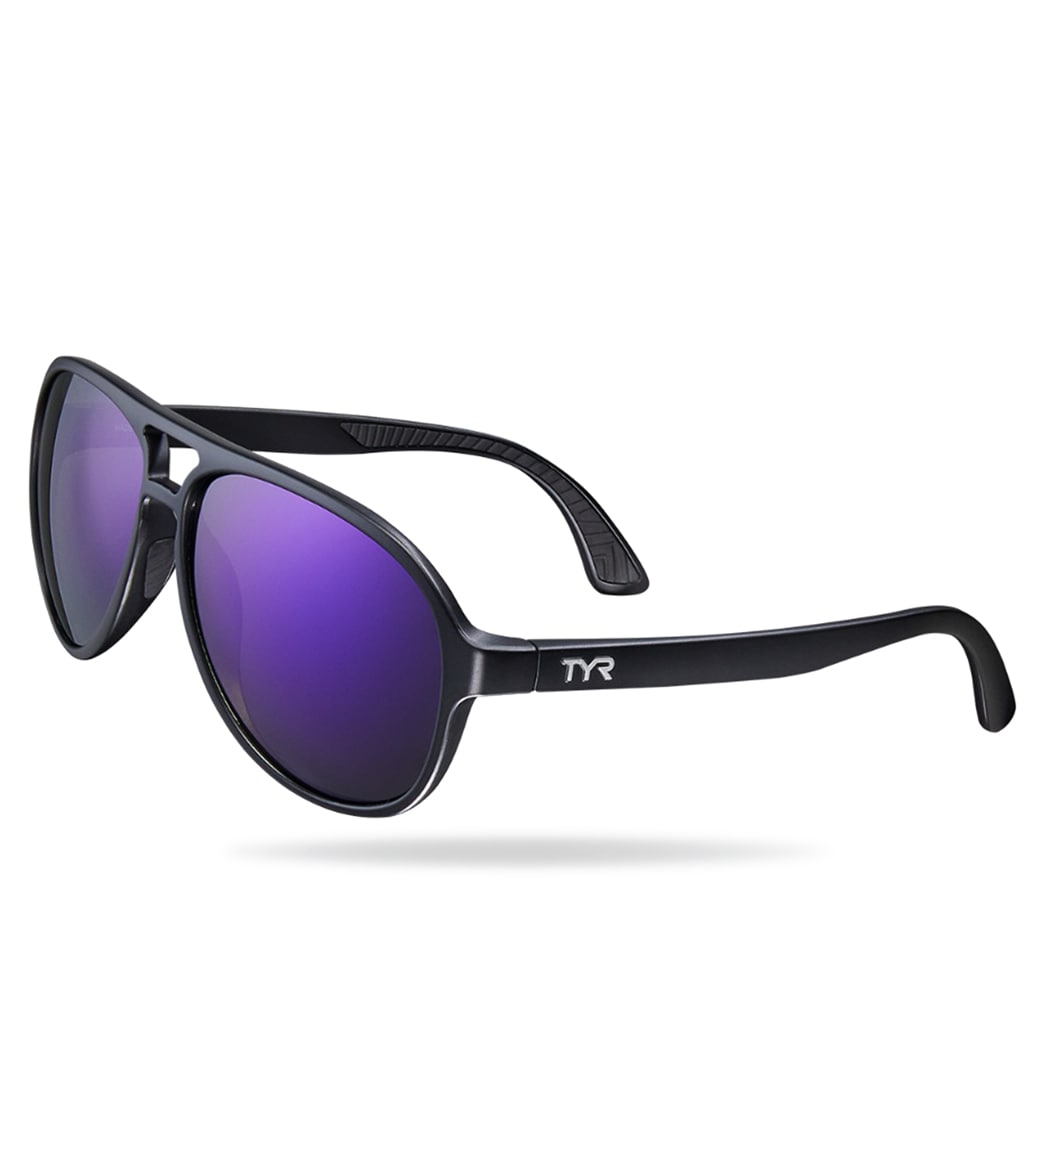 TYR Men's Goldenwest Aviator Large Sunglasses - Purple/Black - Swimoutlet.com